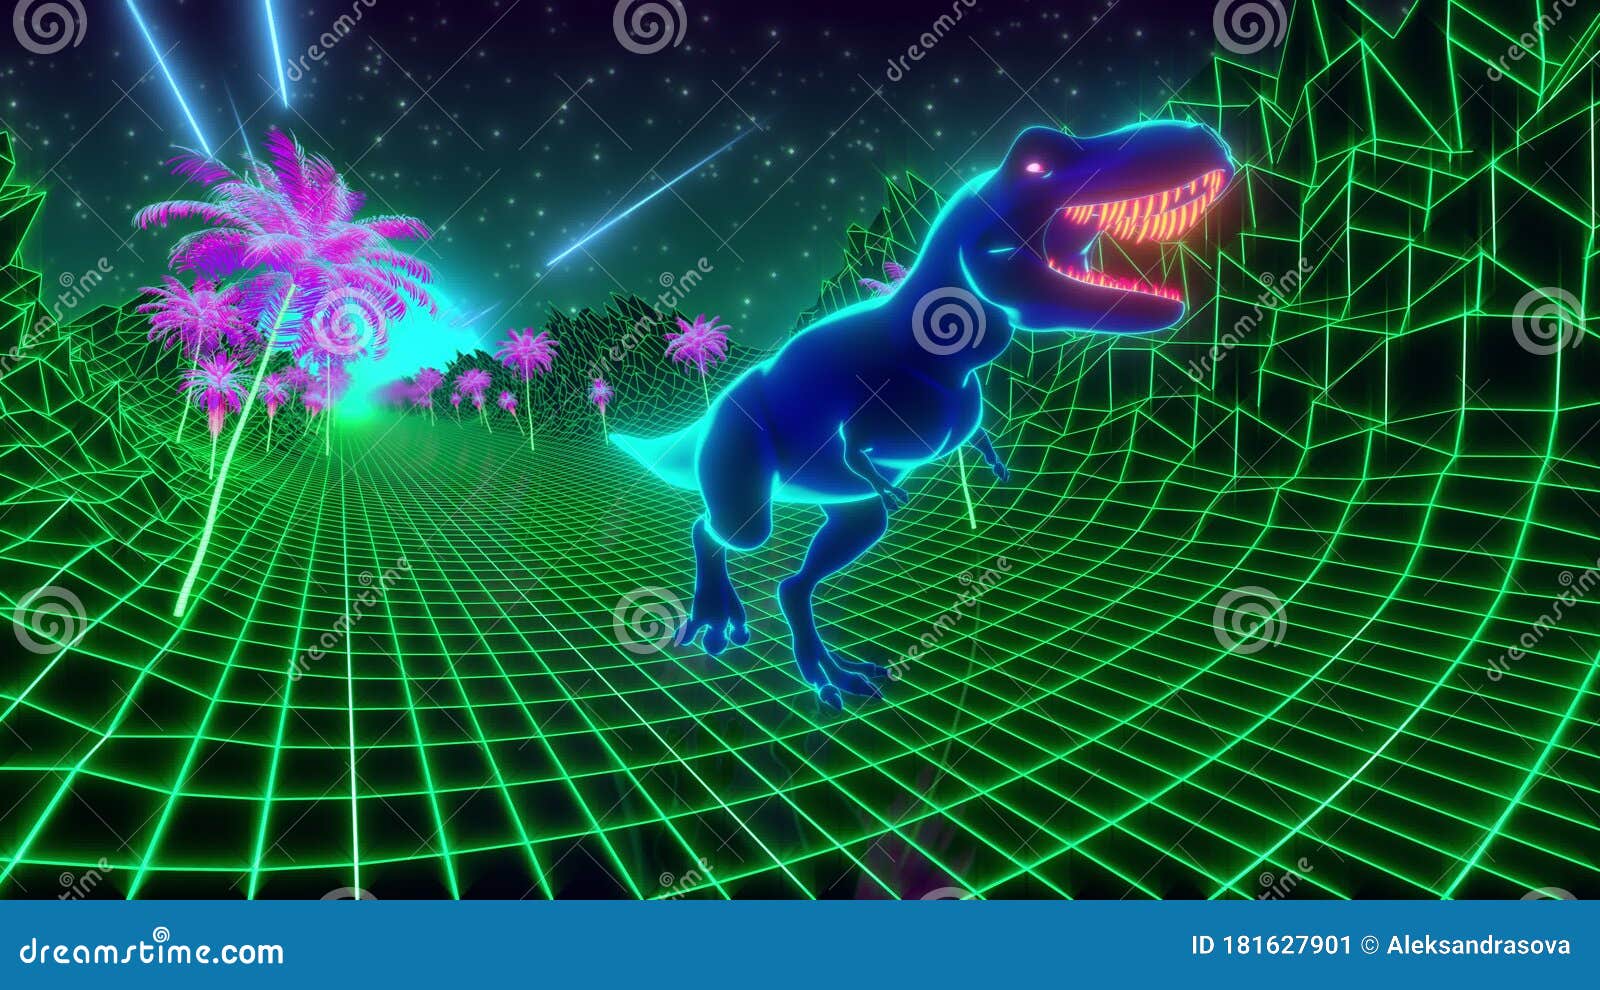 Animated Tyrannosaurus Rex Dinosaur Running Loop - Download Free